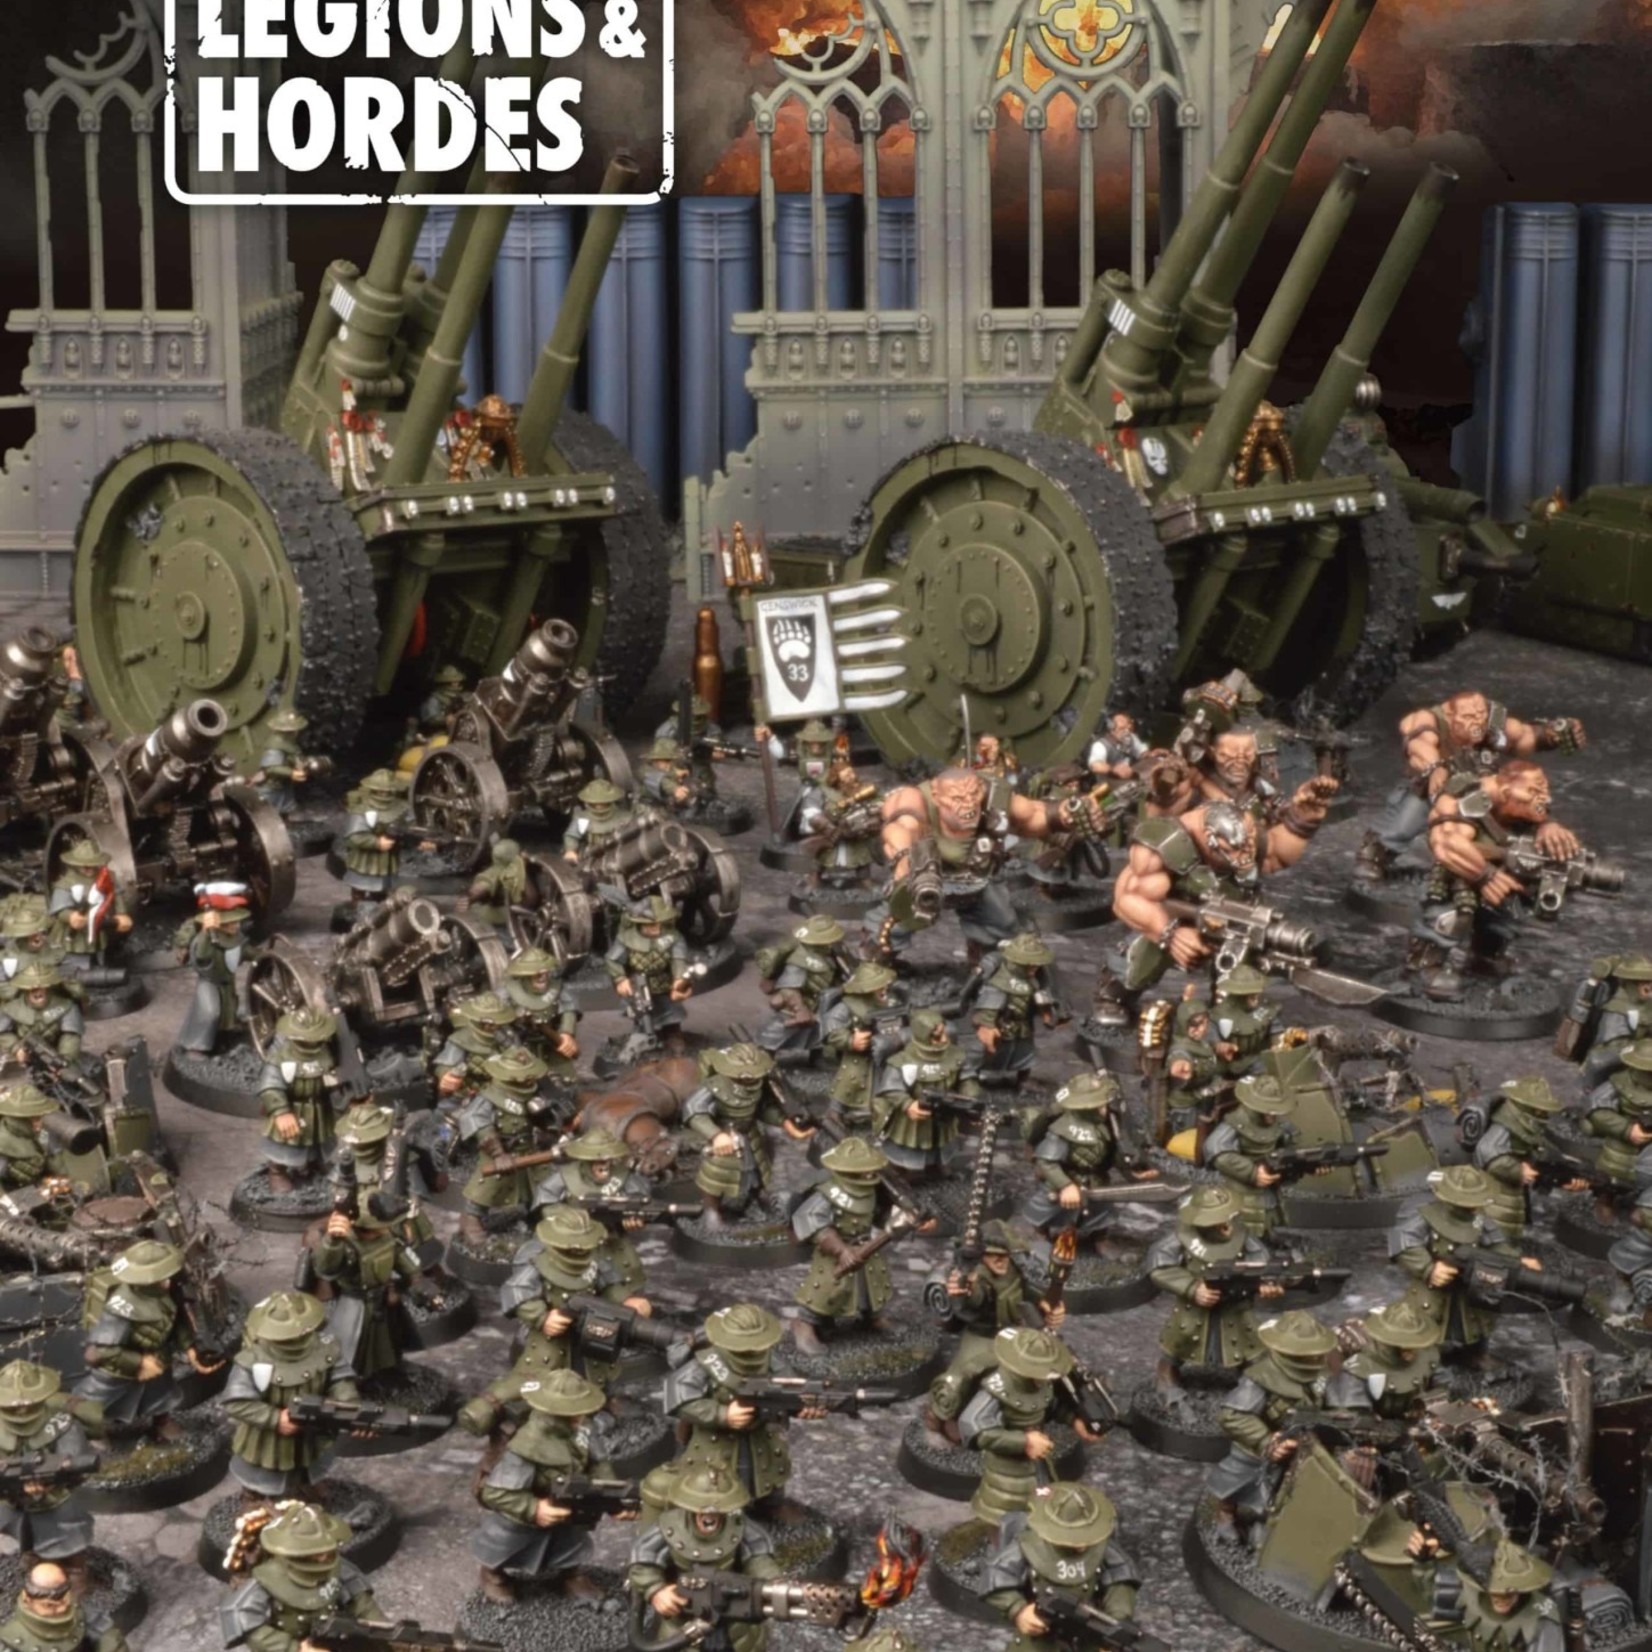 Dave Taylor Miniatures Armies & Legions & Hordes